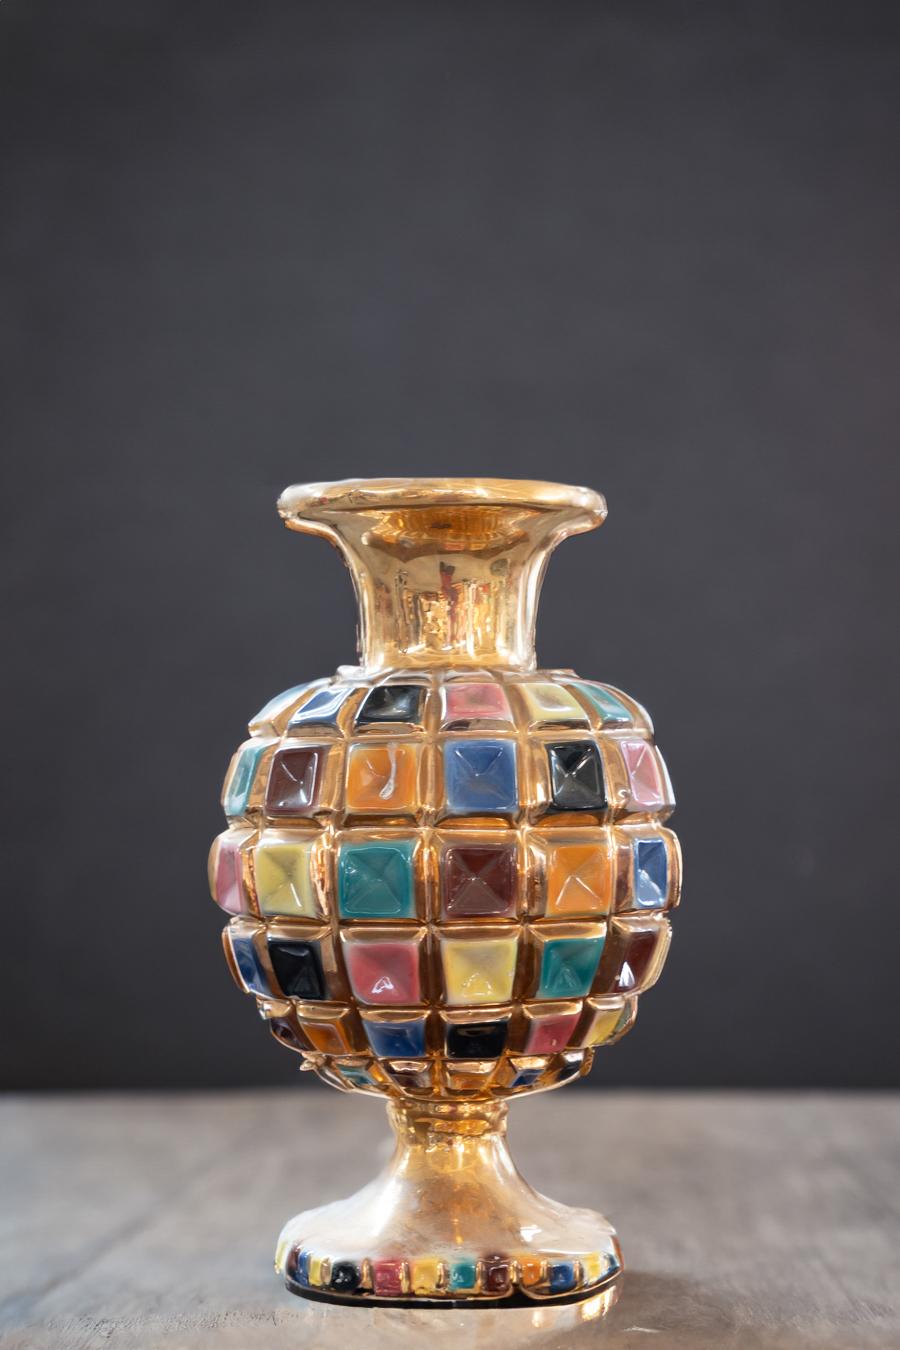 Mid-20th Century Colored Ceramic Vase, 1960s Vintage Style Design Period 1950s - 1959 Period For Sale